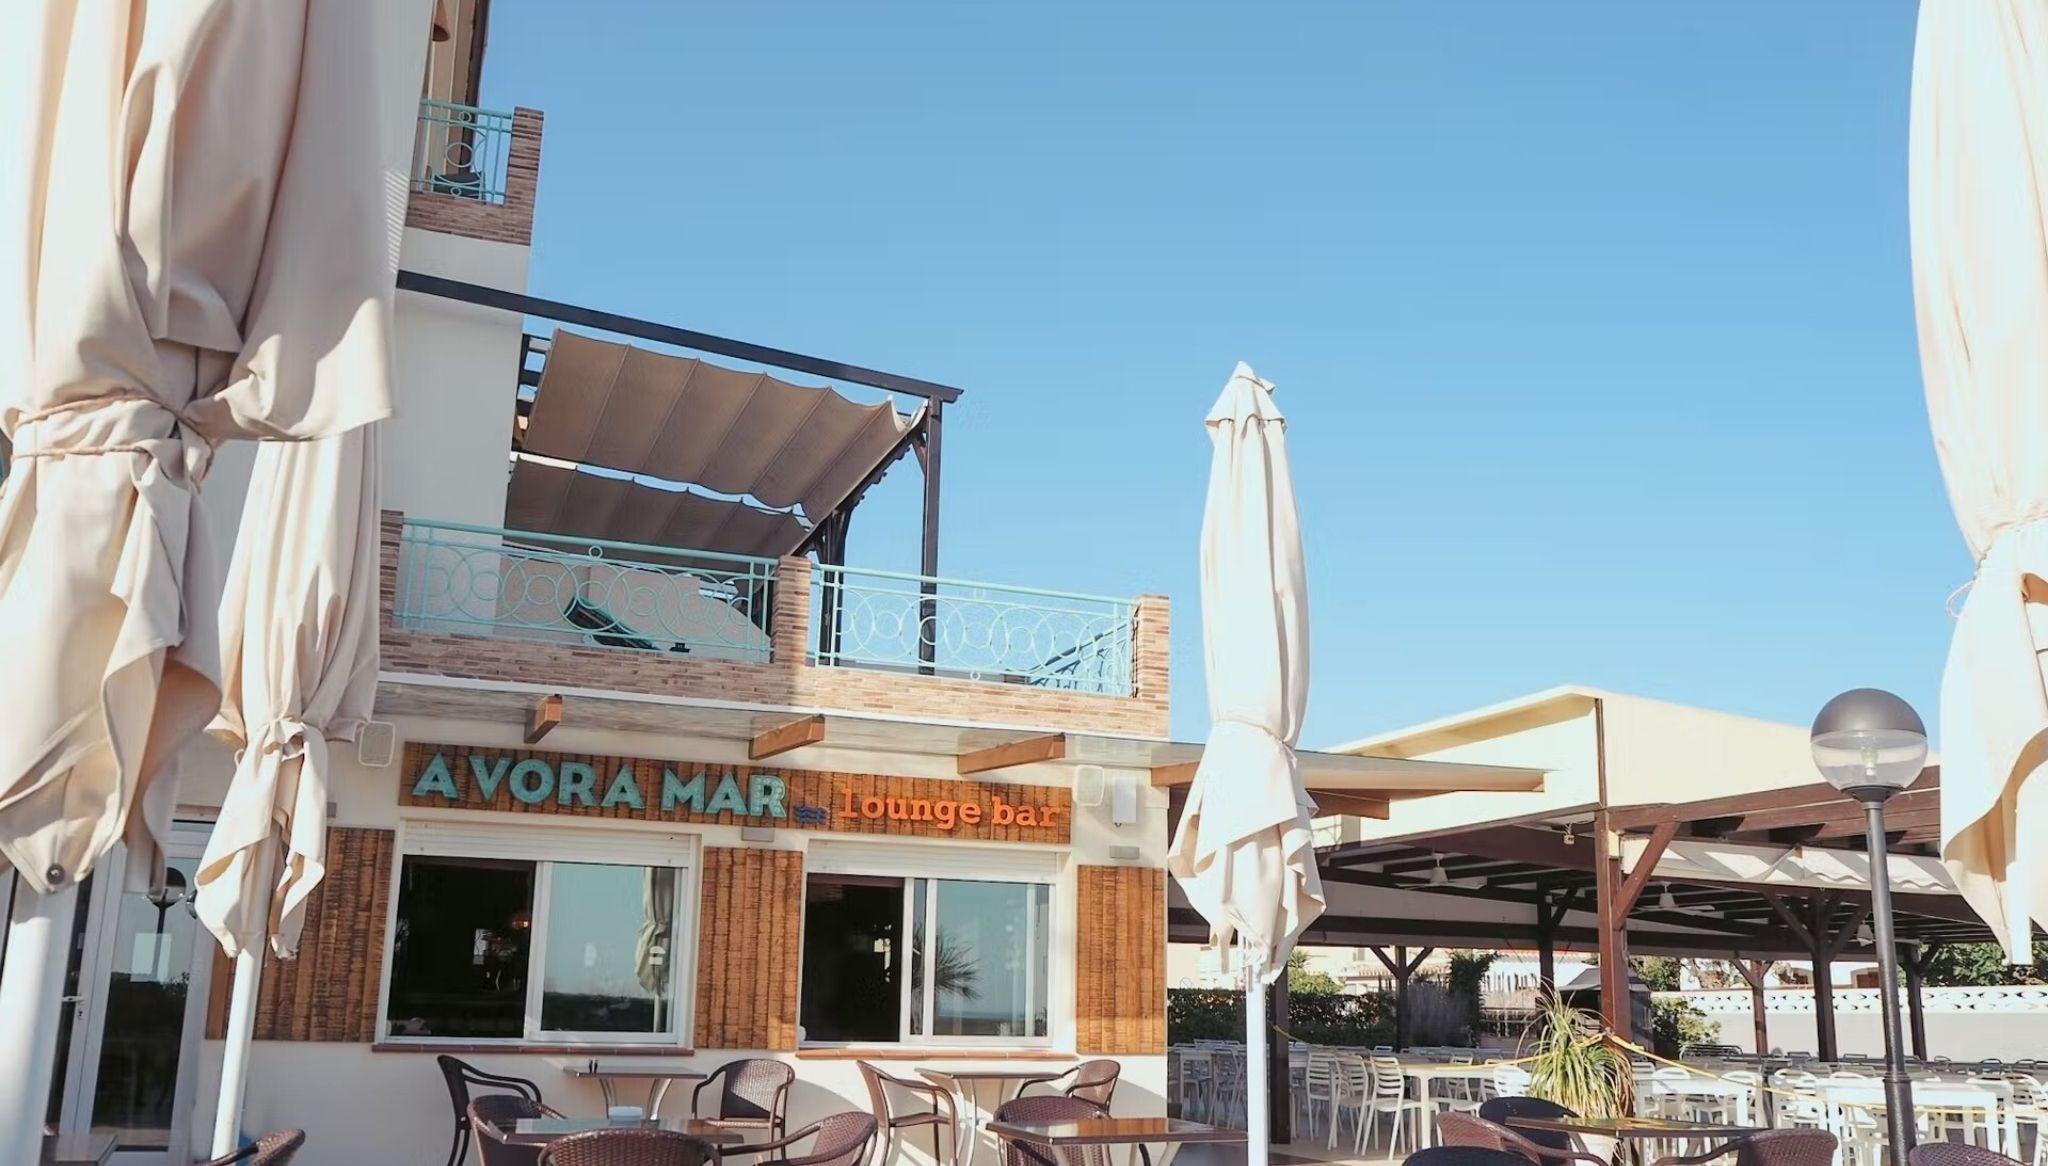 A vora mar Lounge Bar – Noguera Mar Hotel